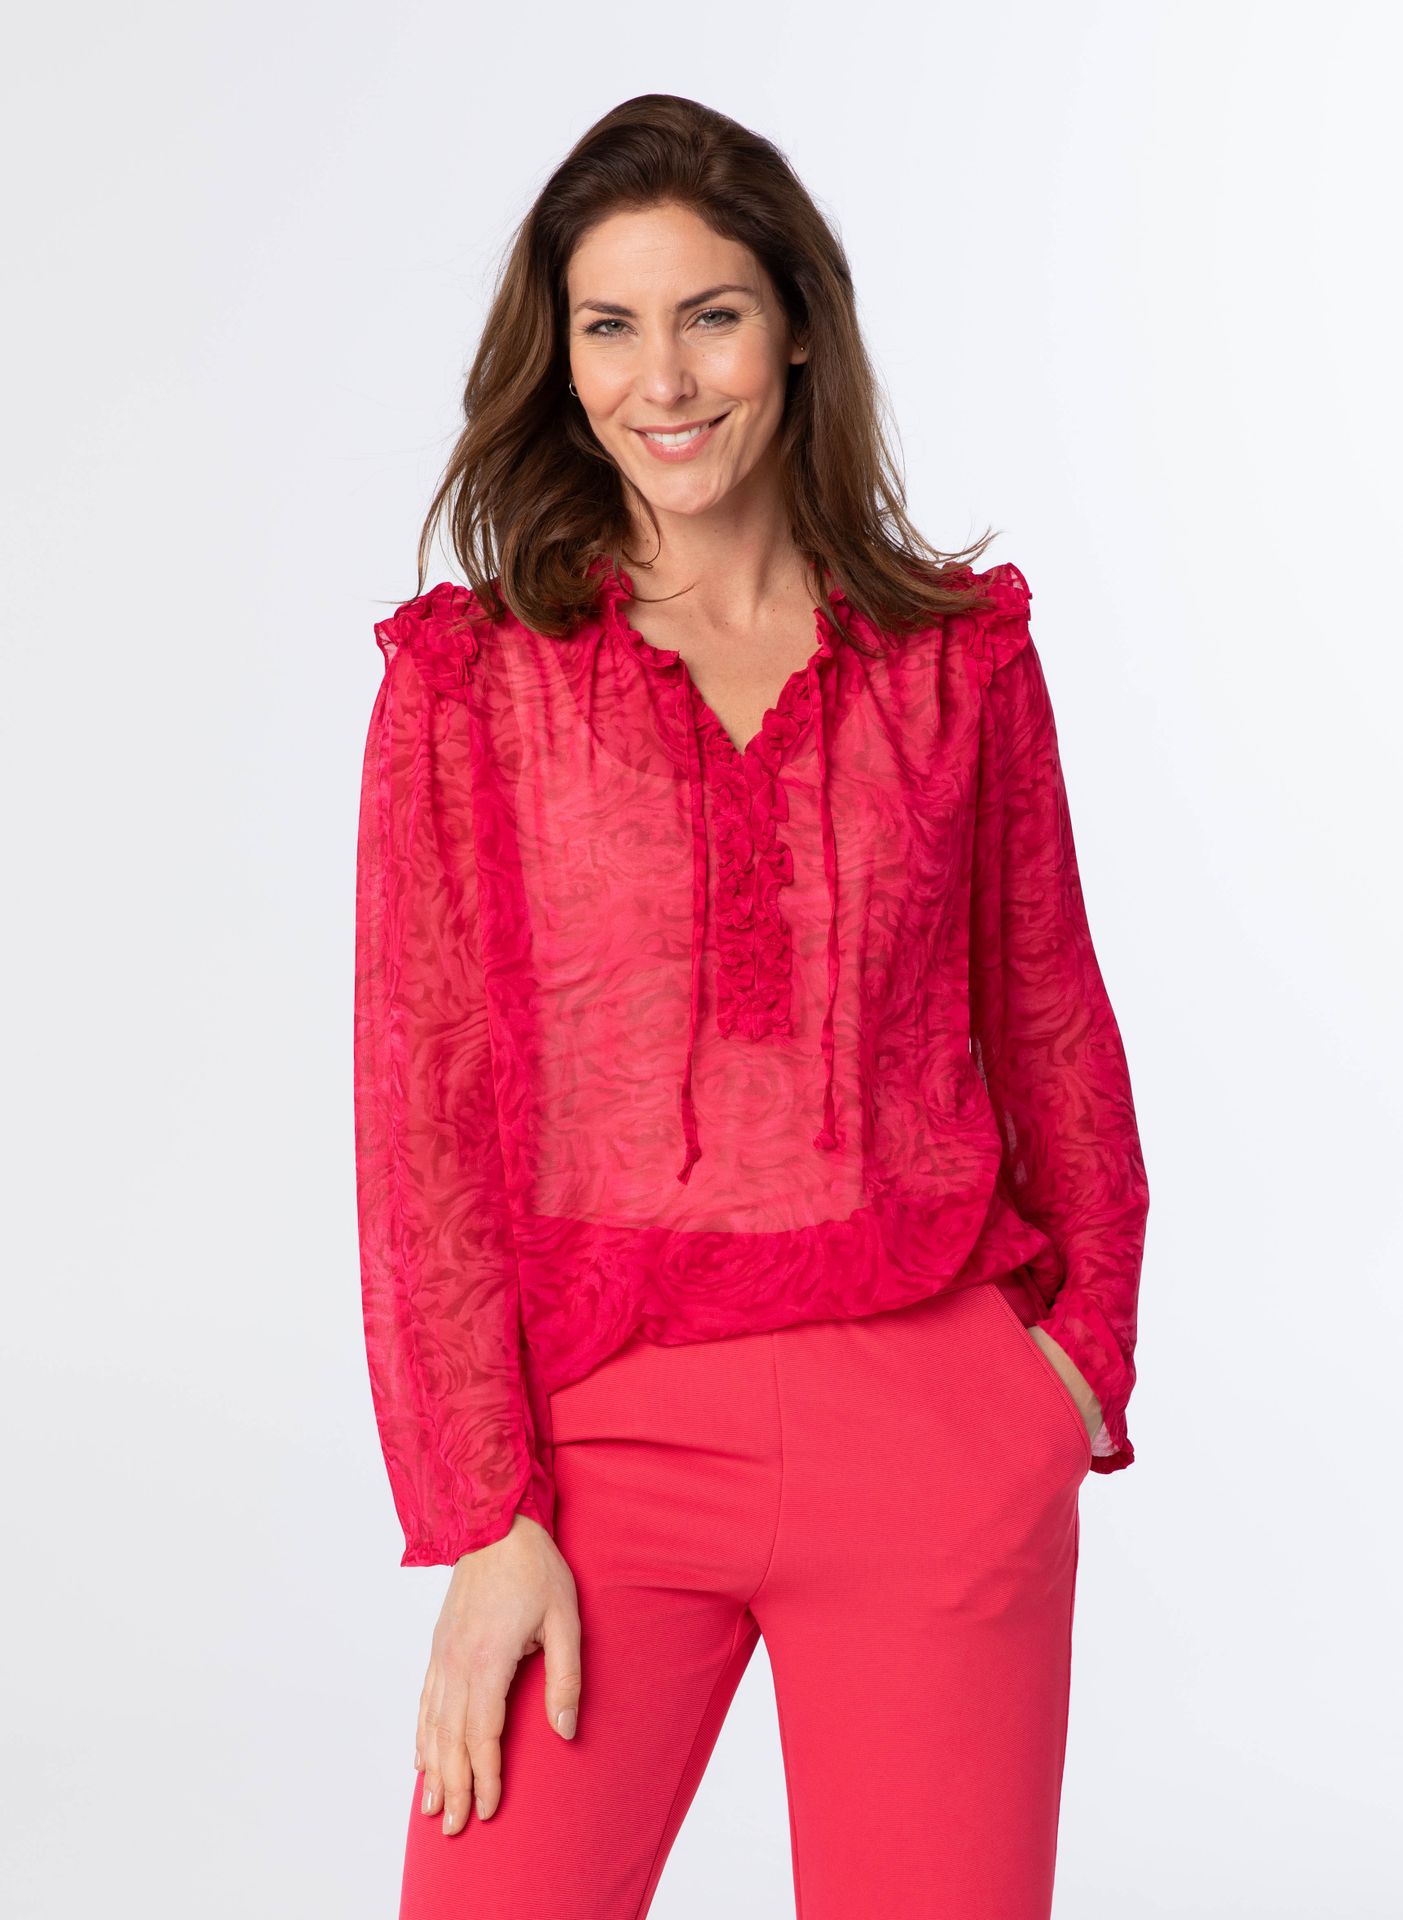 Norah Roze blouse met ruches fuchsia 213191-953